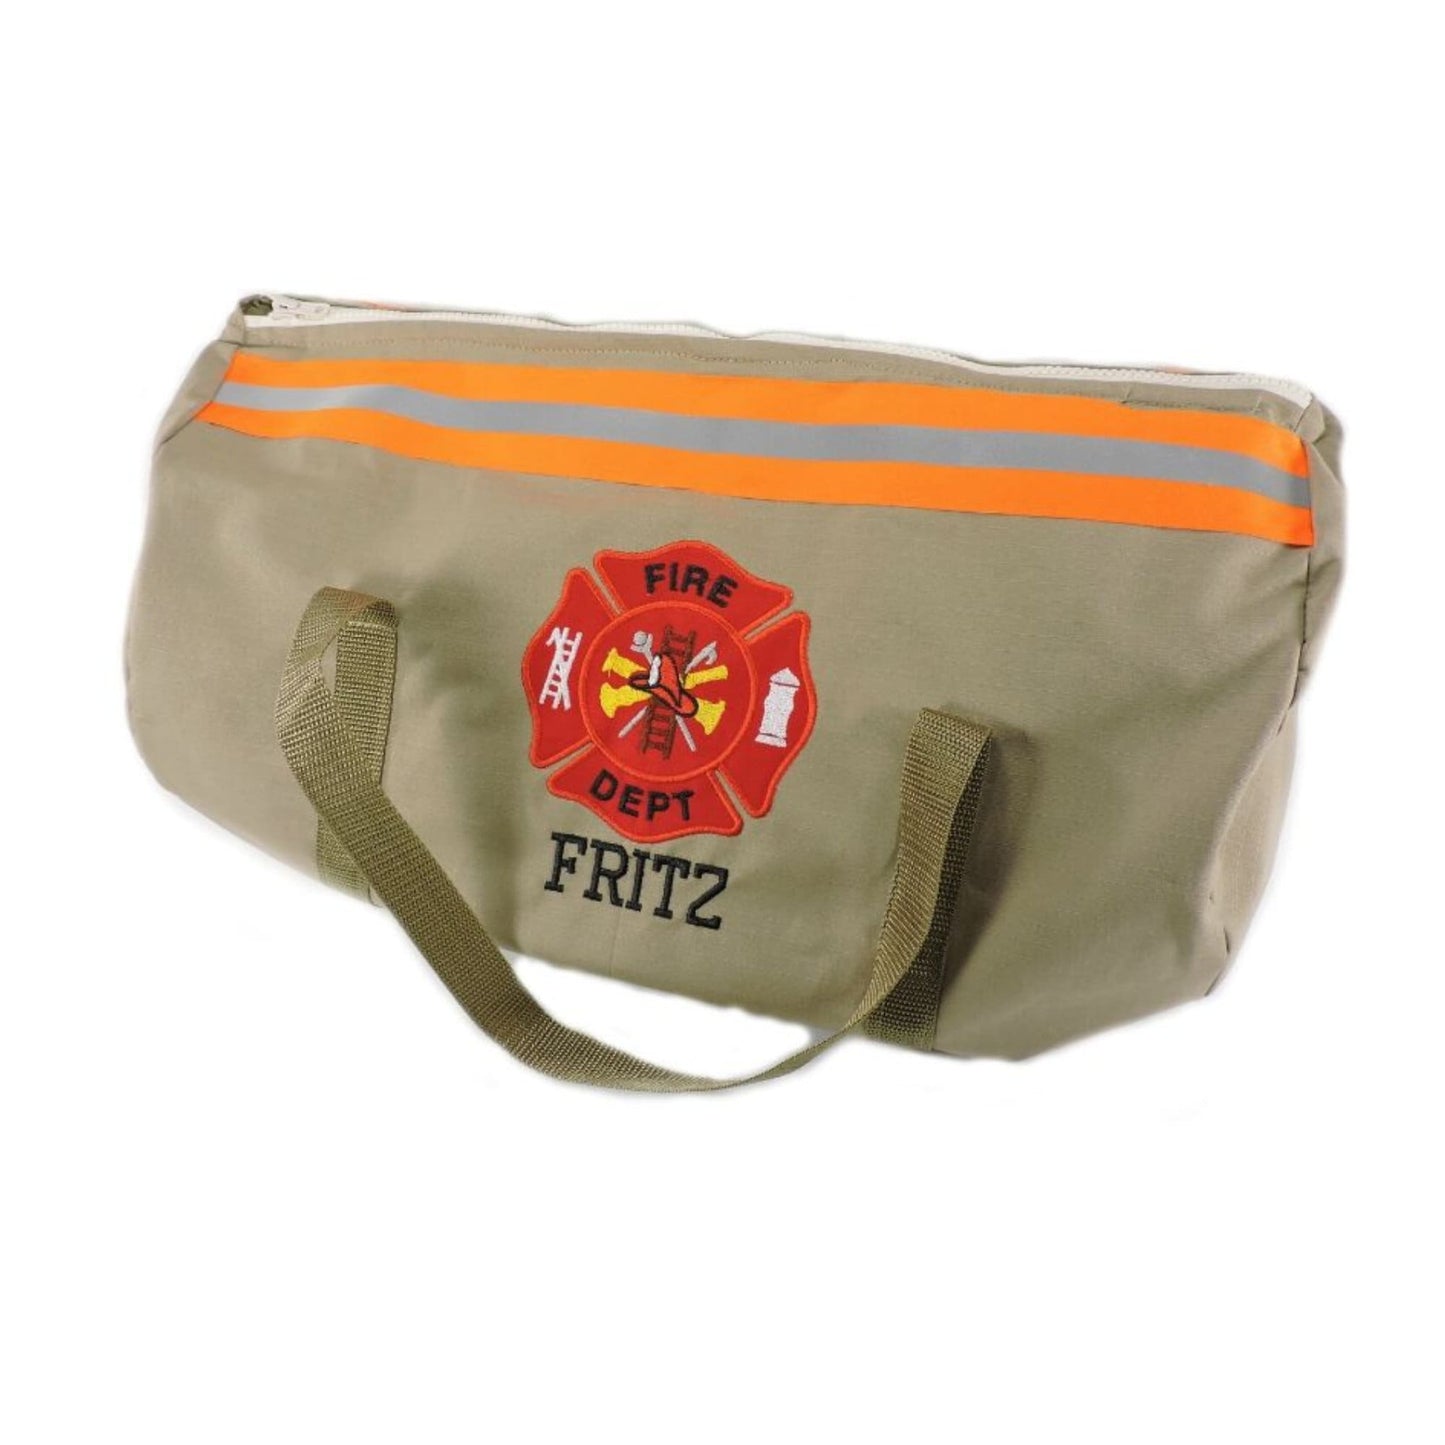 tan fabric orange reflective tape firefighter duffel bag